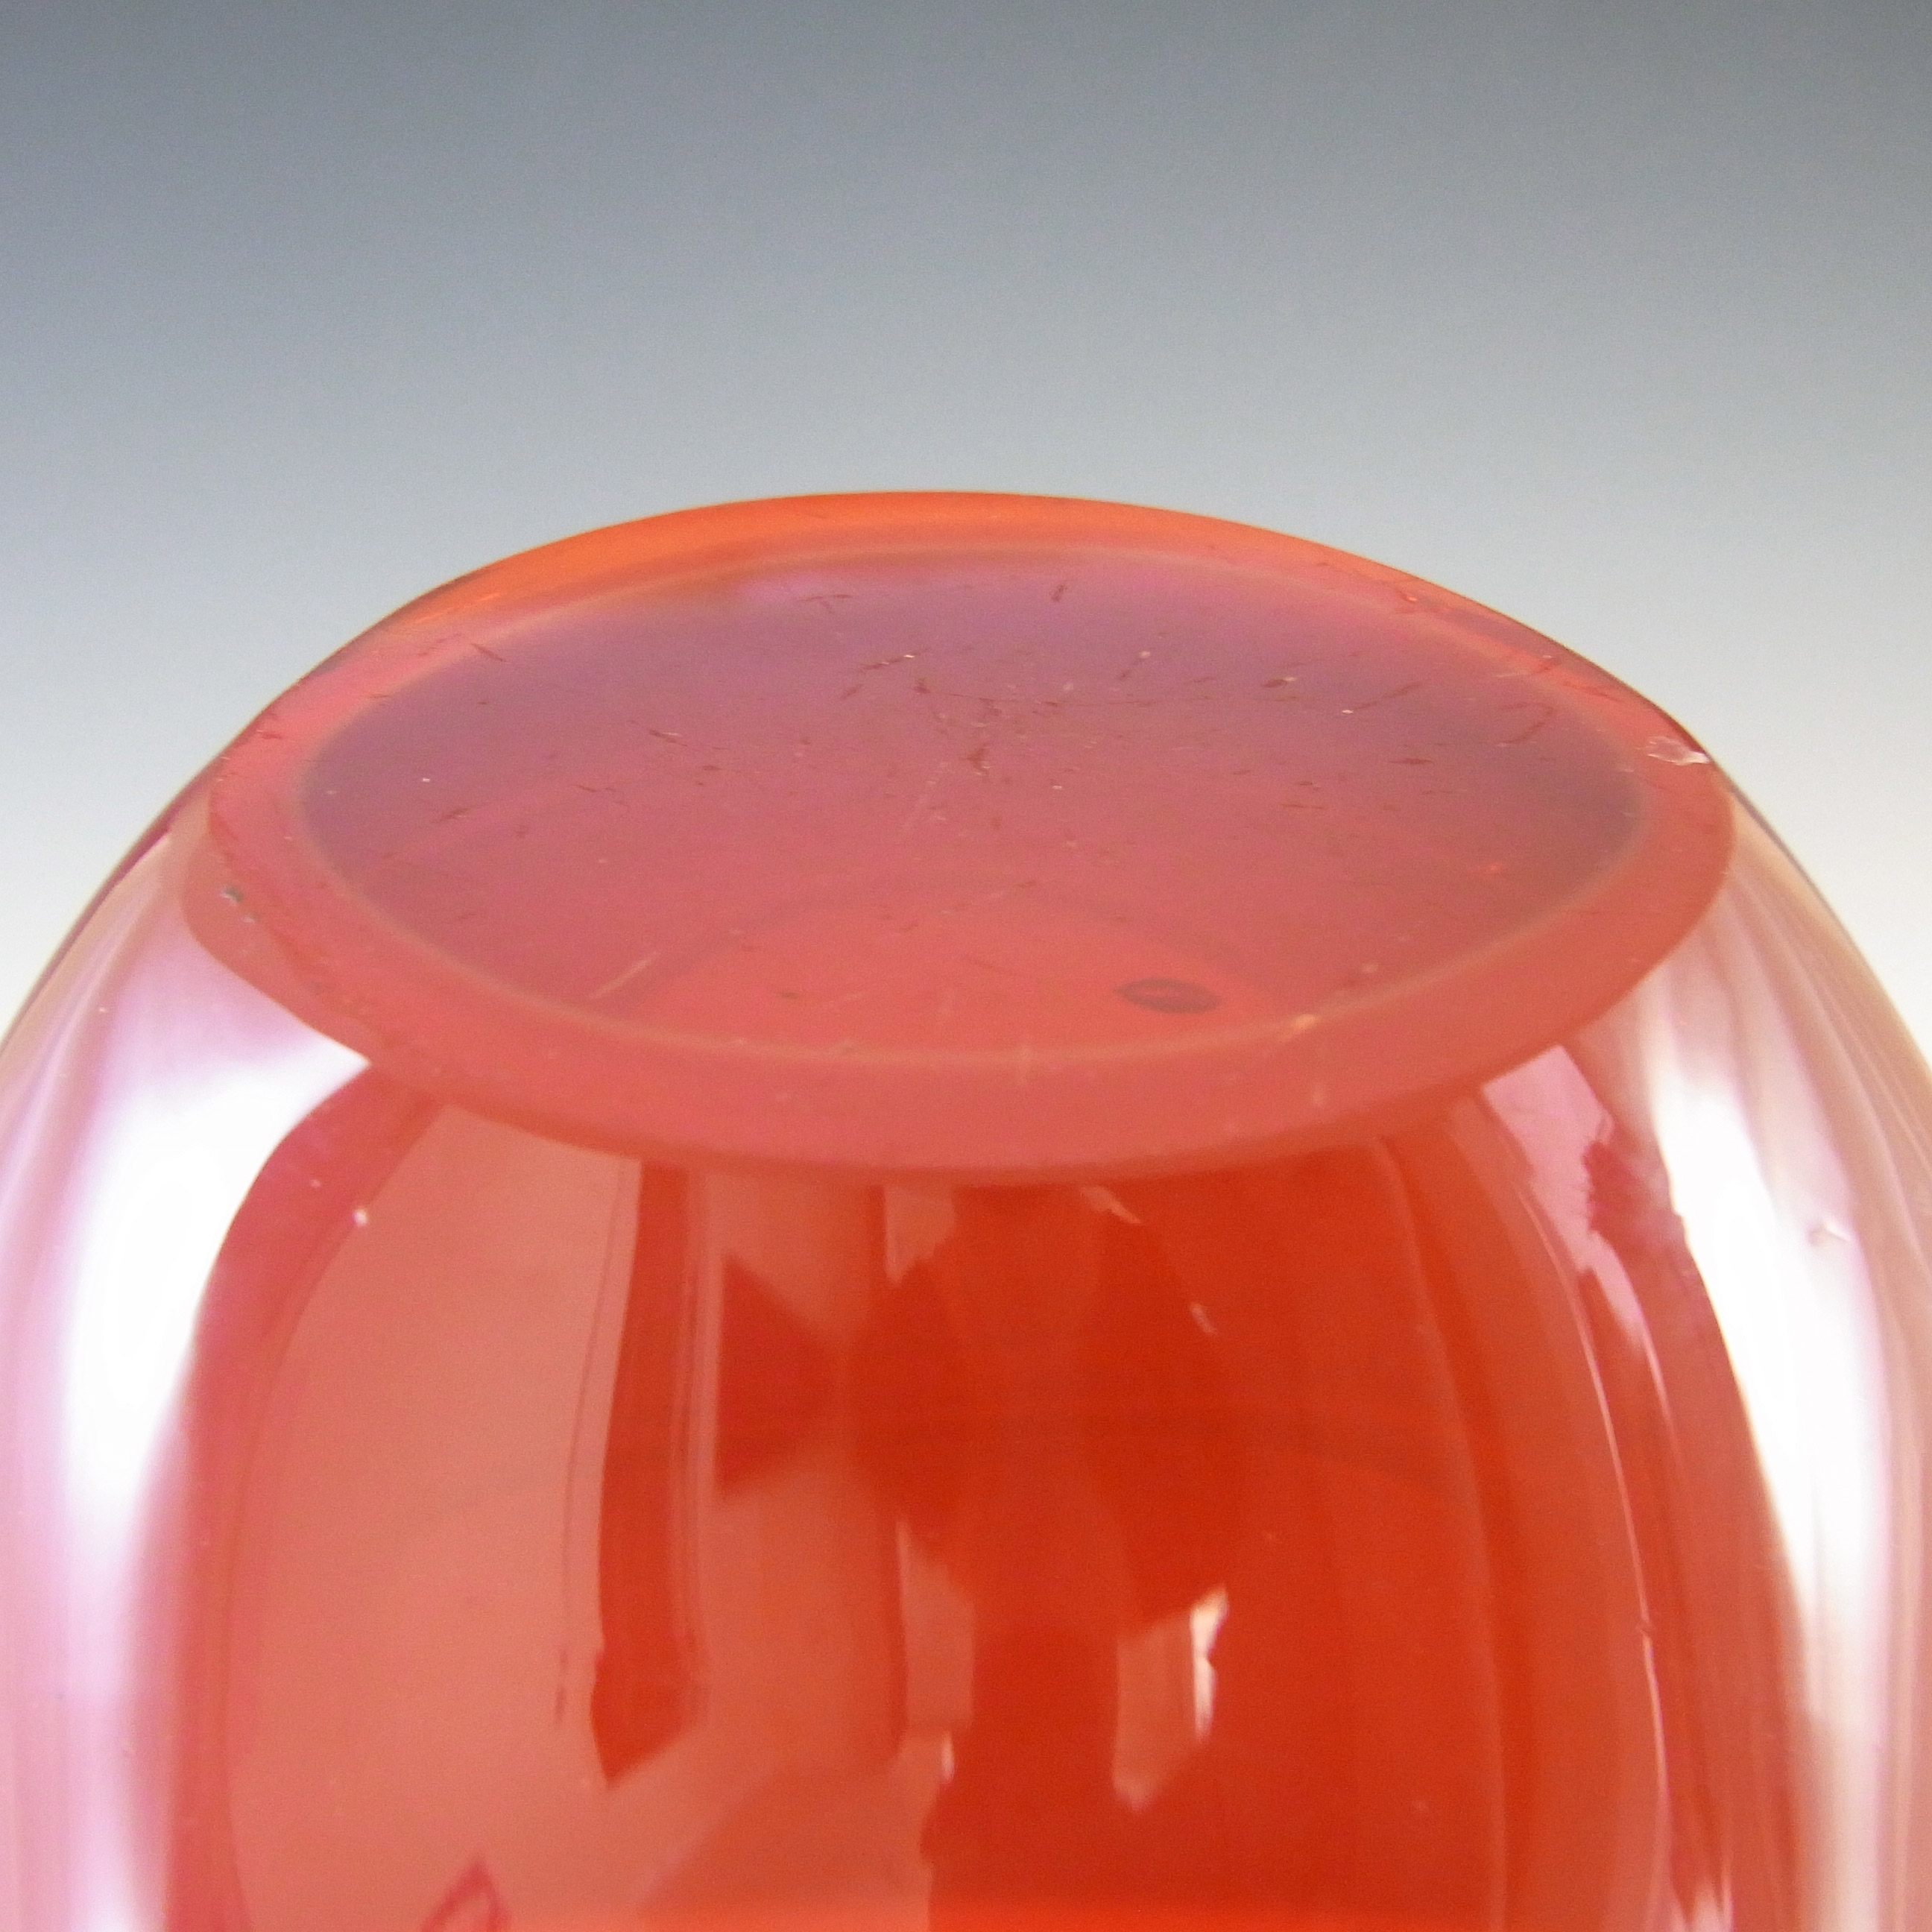 Viartec Murano Style Selenium Red & Orange Spanish Glass Sculpture - Click Image to Close